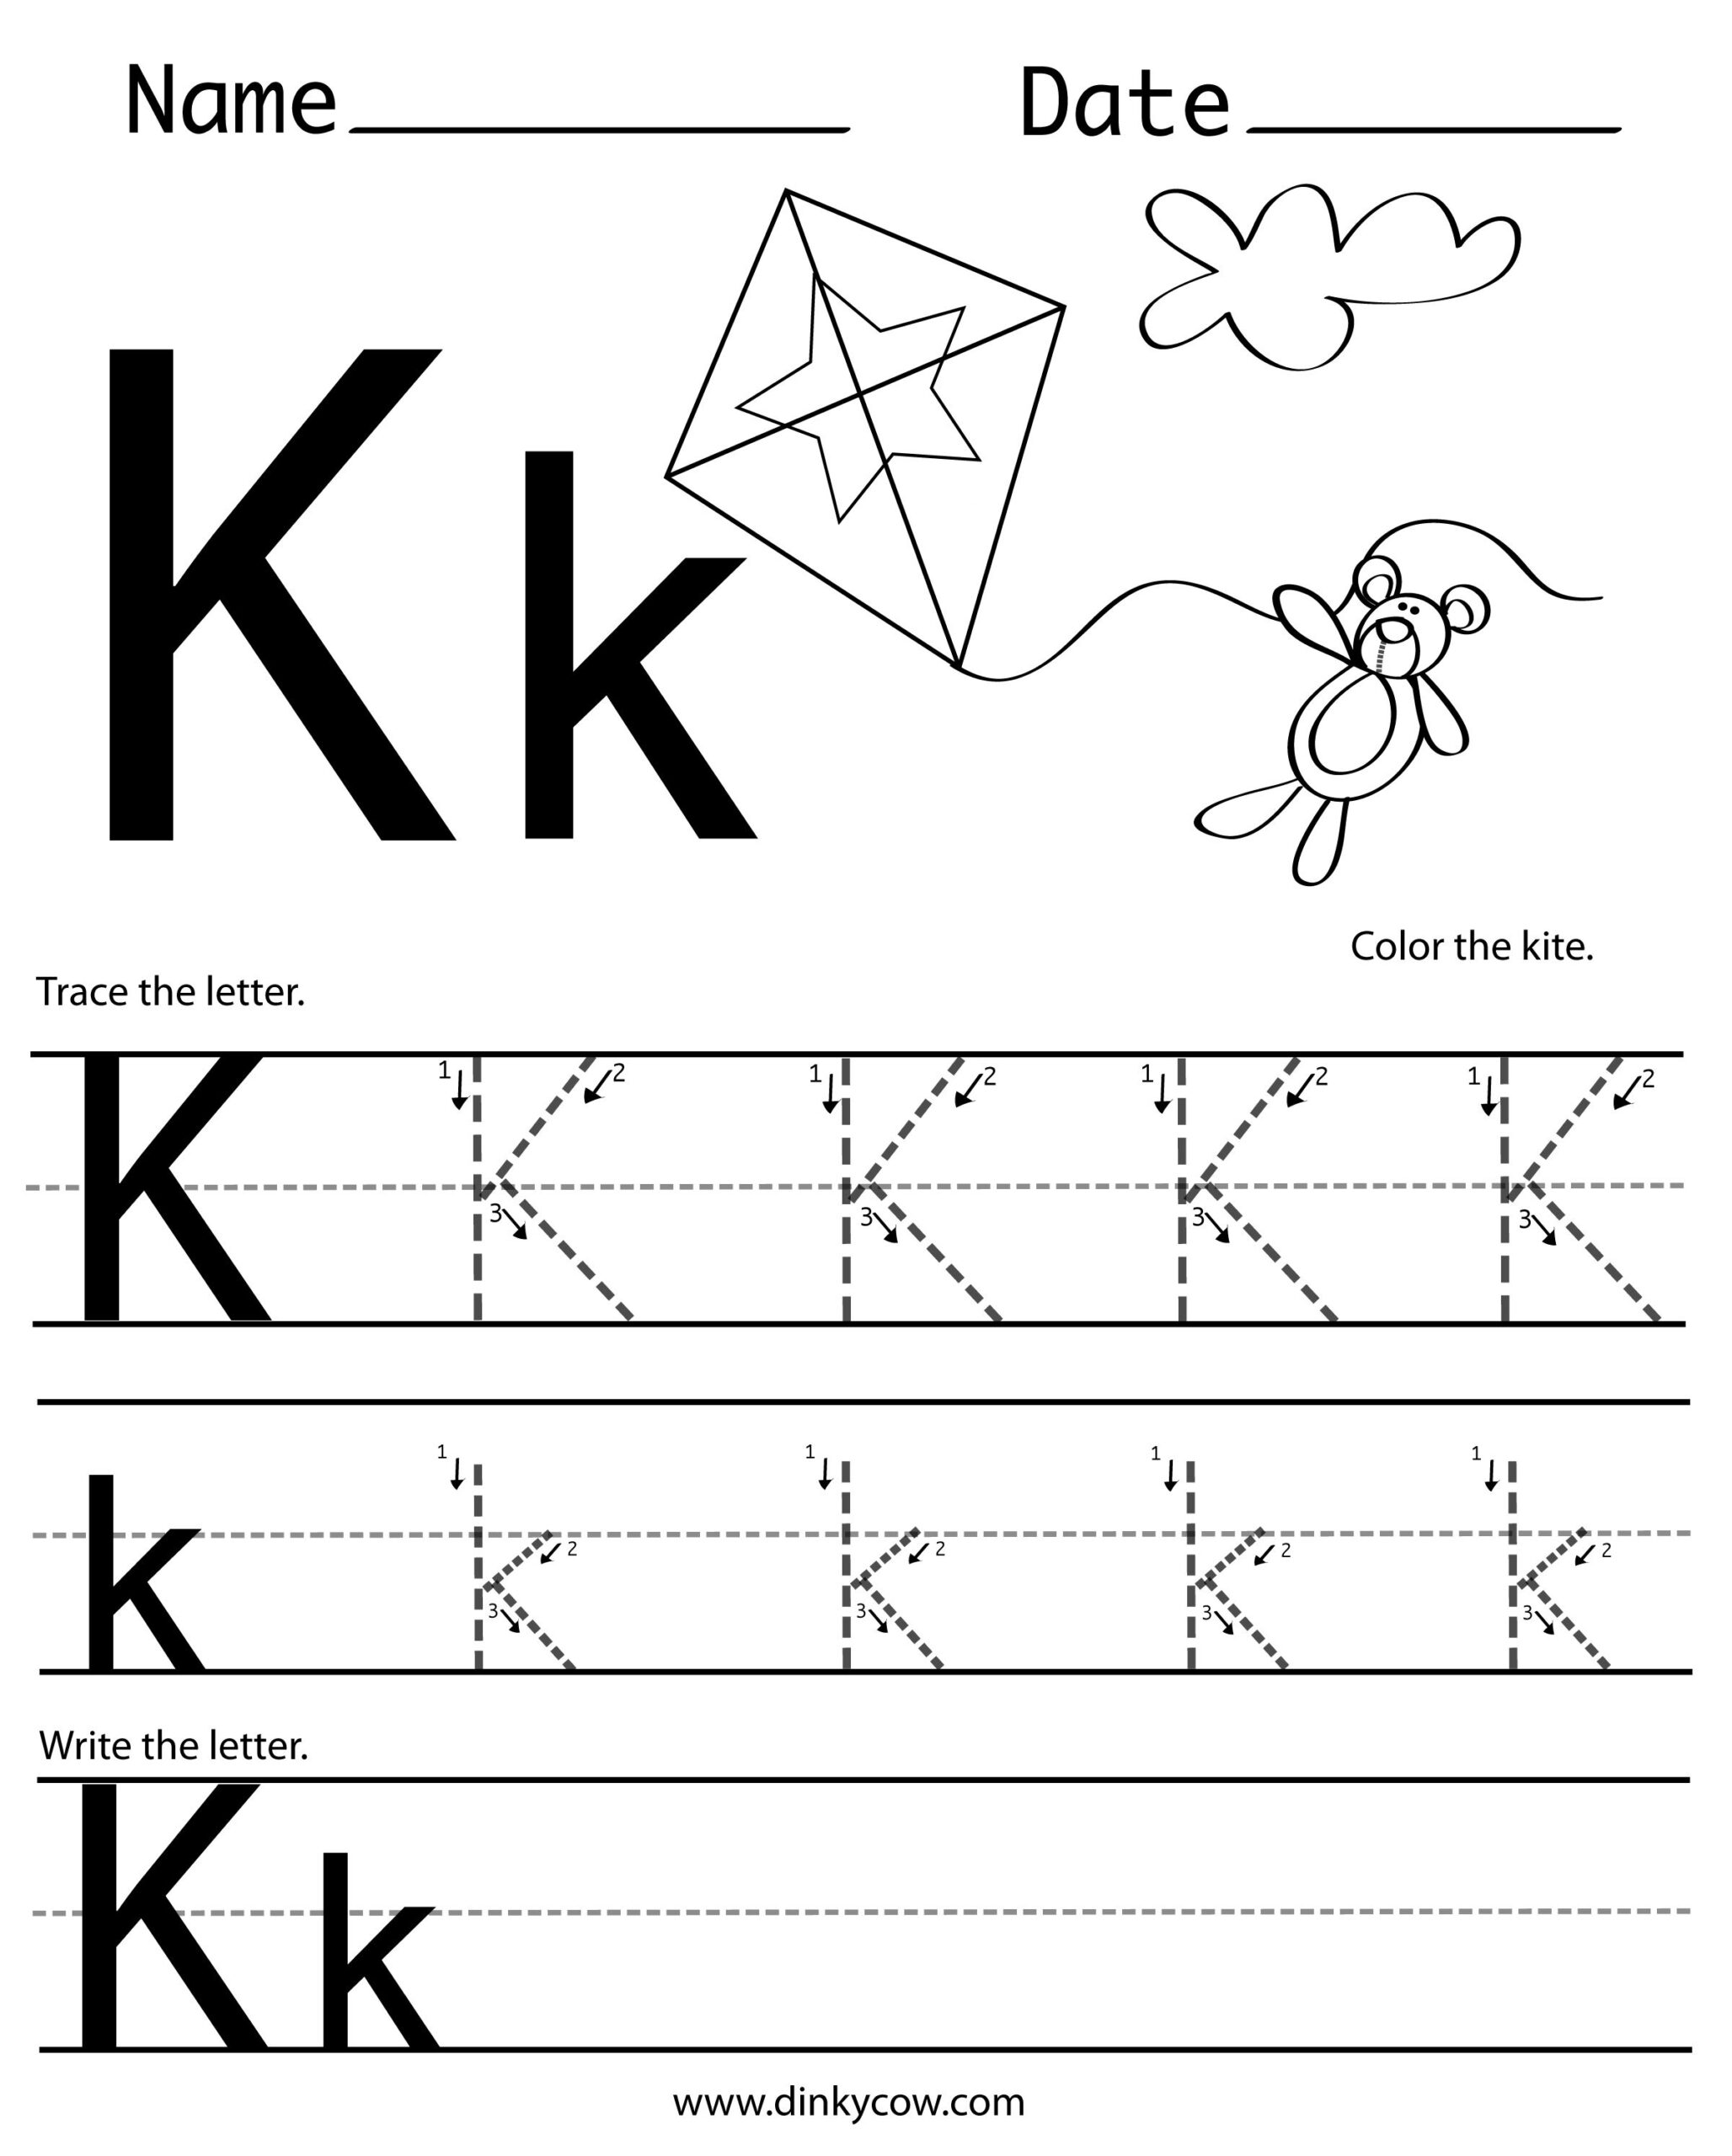 Printable Letter K Tracing Worksheets For Kindergarten Alphabet Letter K Tracing Worksheet 